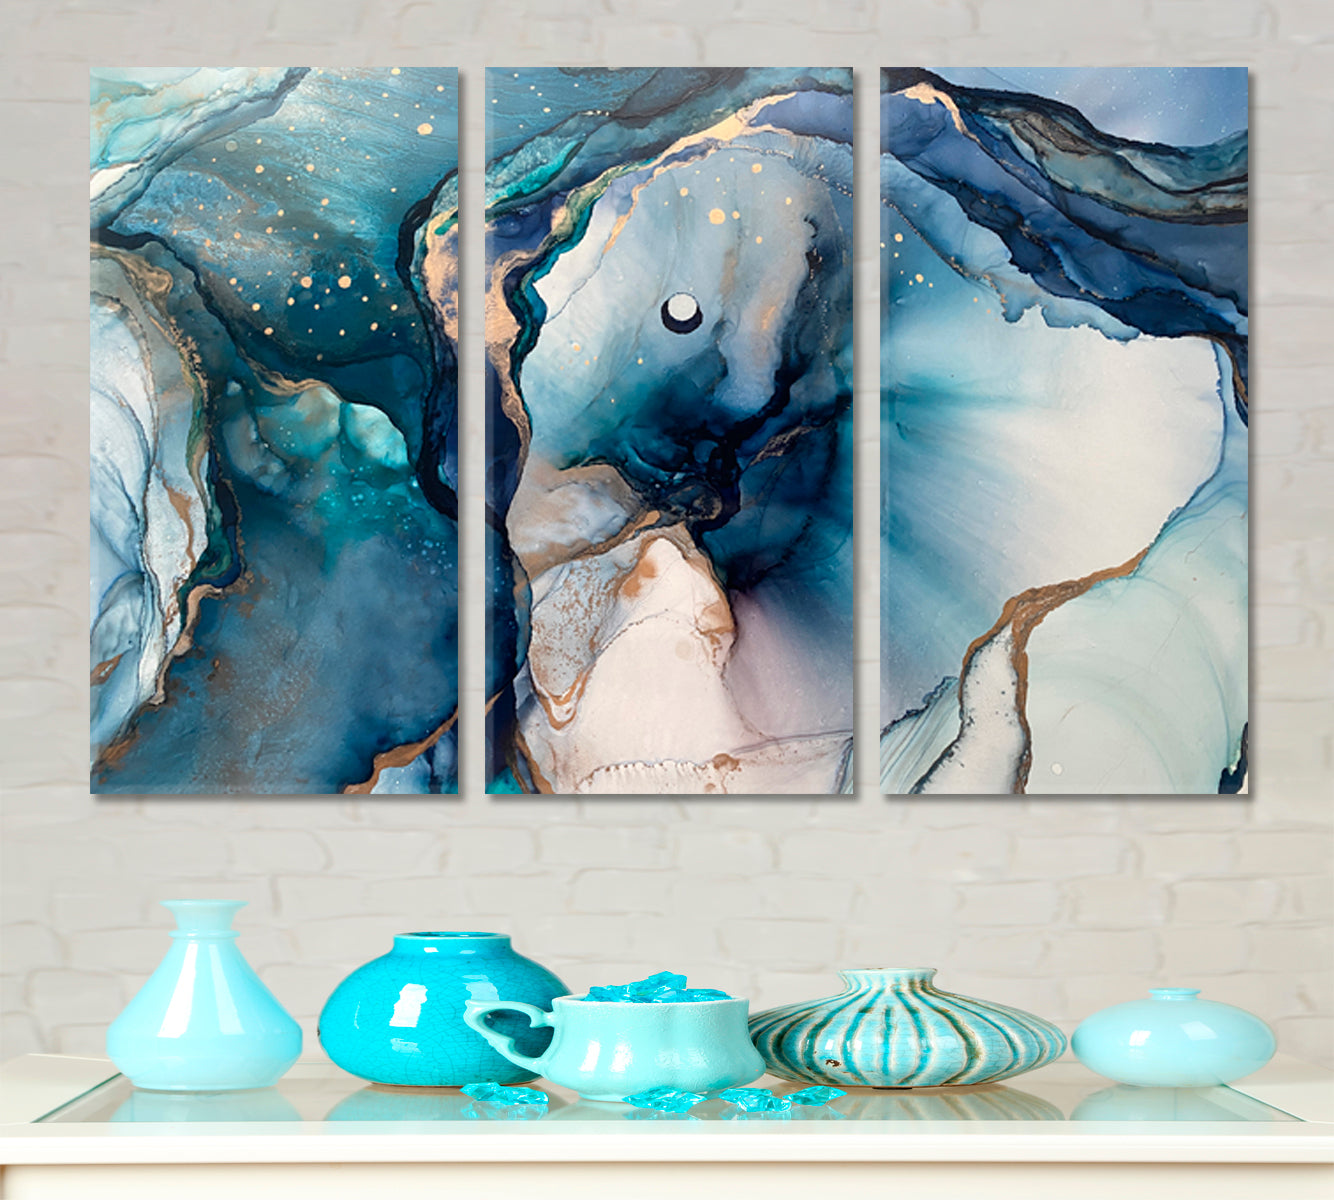 INK PAINTING Blue Transparent Waves Swirls Glowing Golden Veins Fluid Art, Oriental Marbling Canvas Print Artesty 3 panels 36" x 24" 